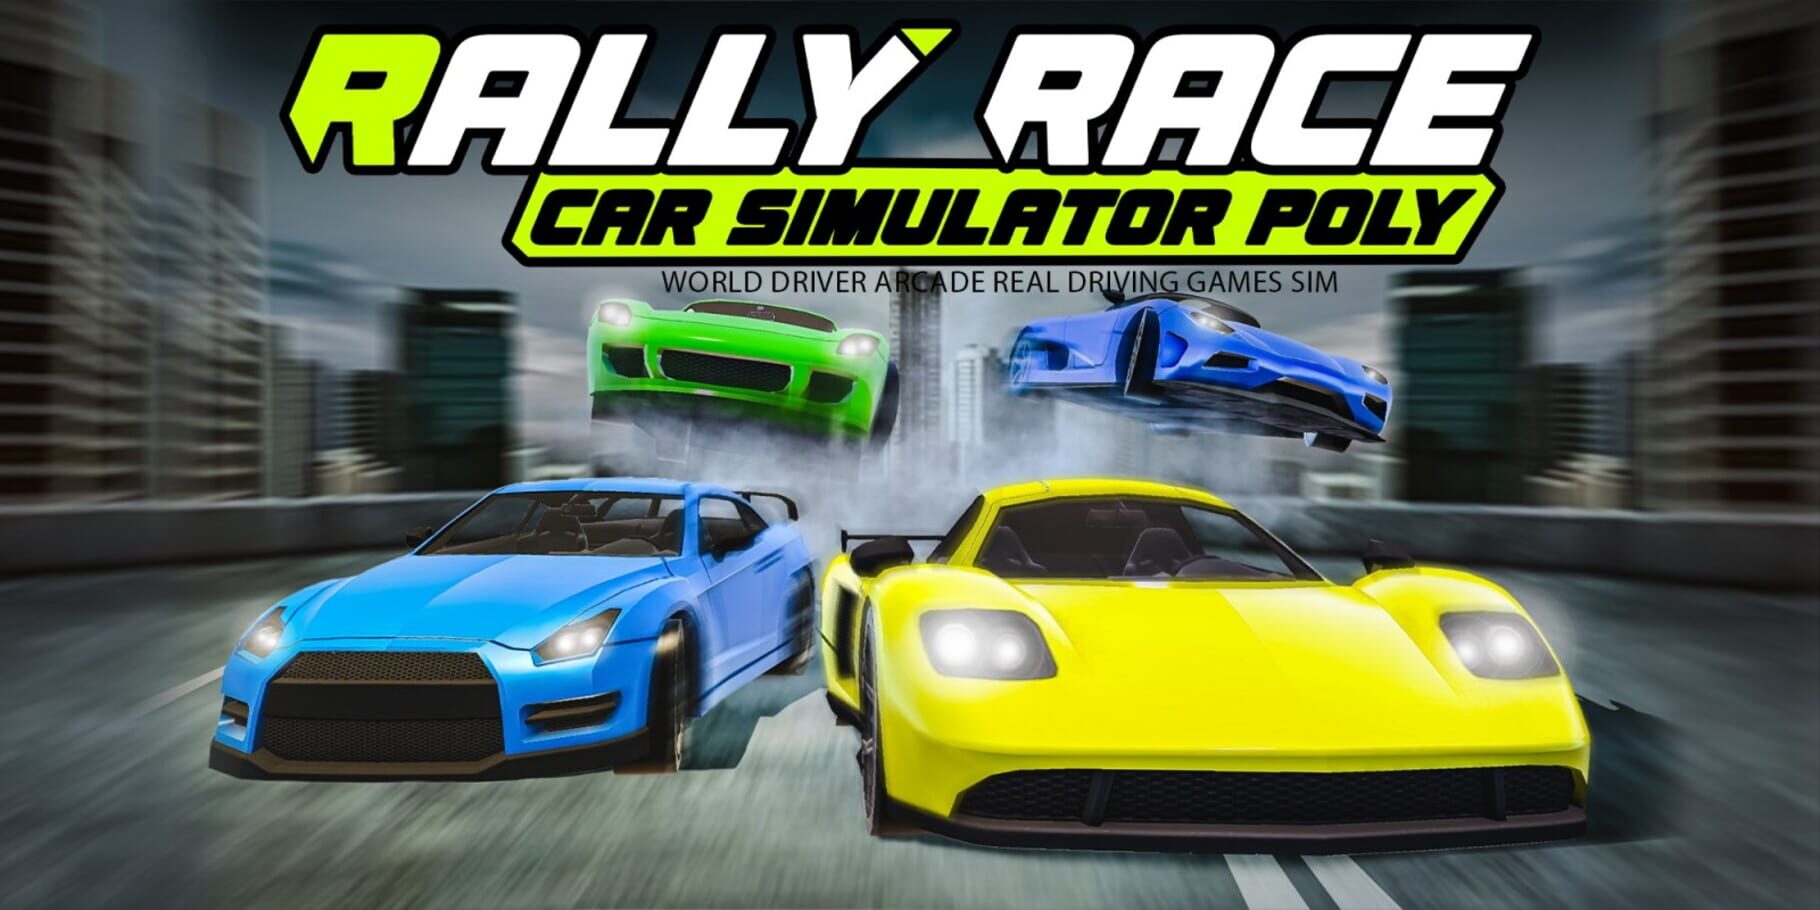 Arte - Rally Race Car Simulator Poly: World Driver Arcade Real Driving Games Sim